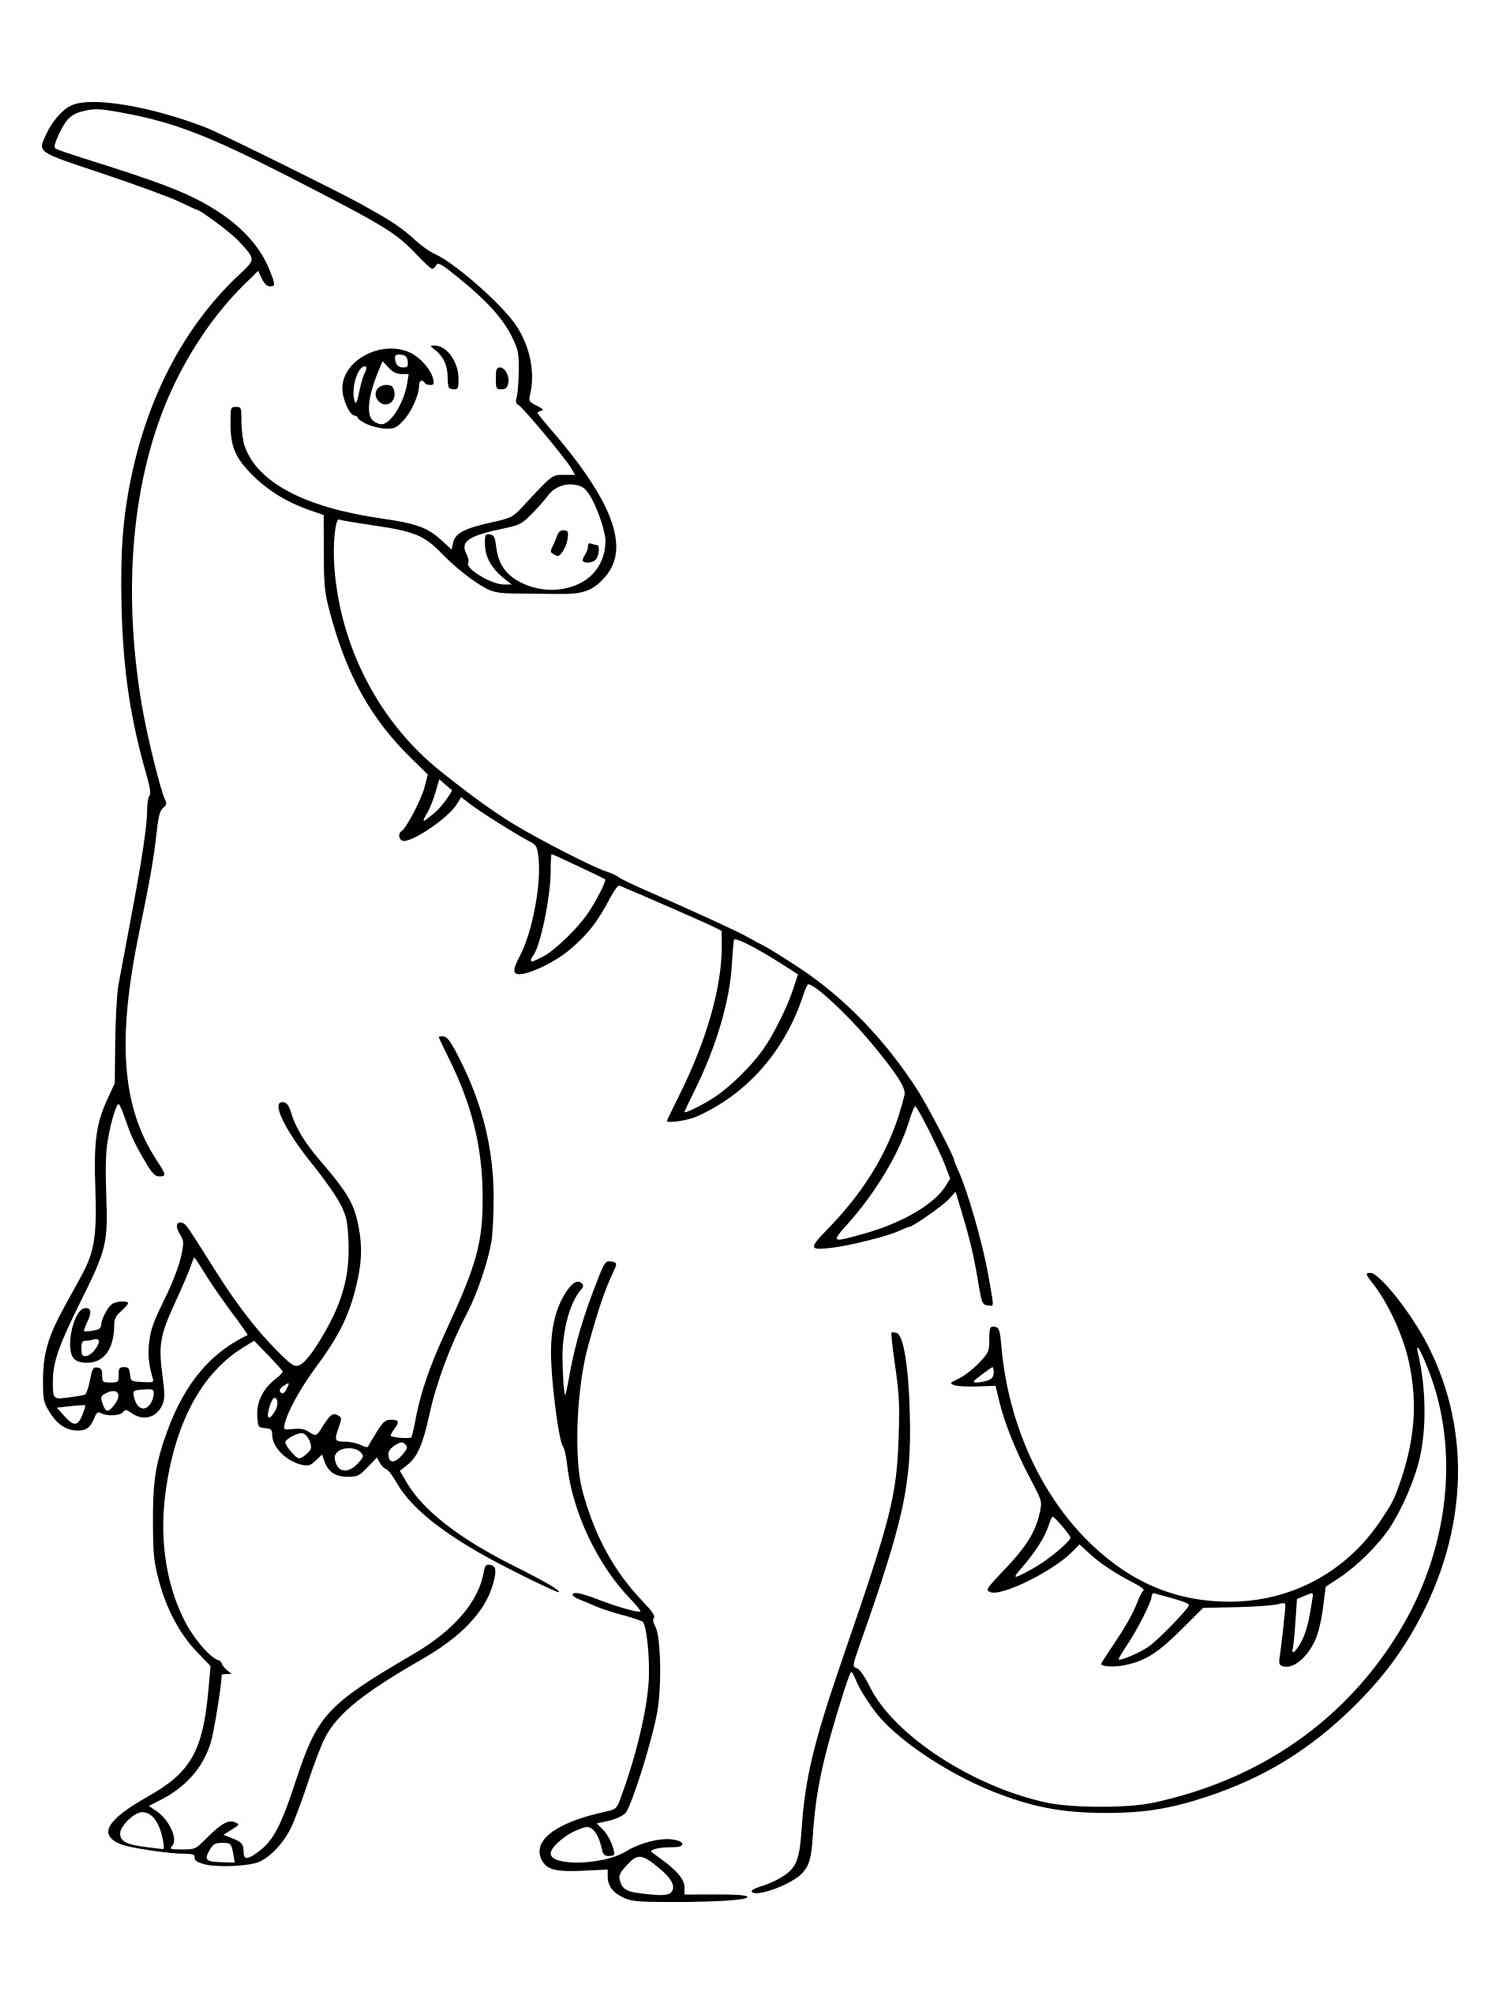 Dino Parasaurolophus coloring page